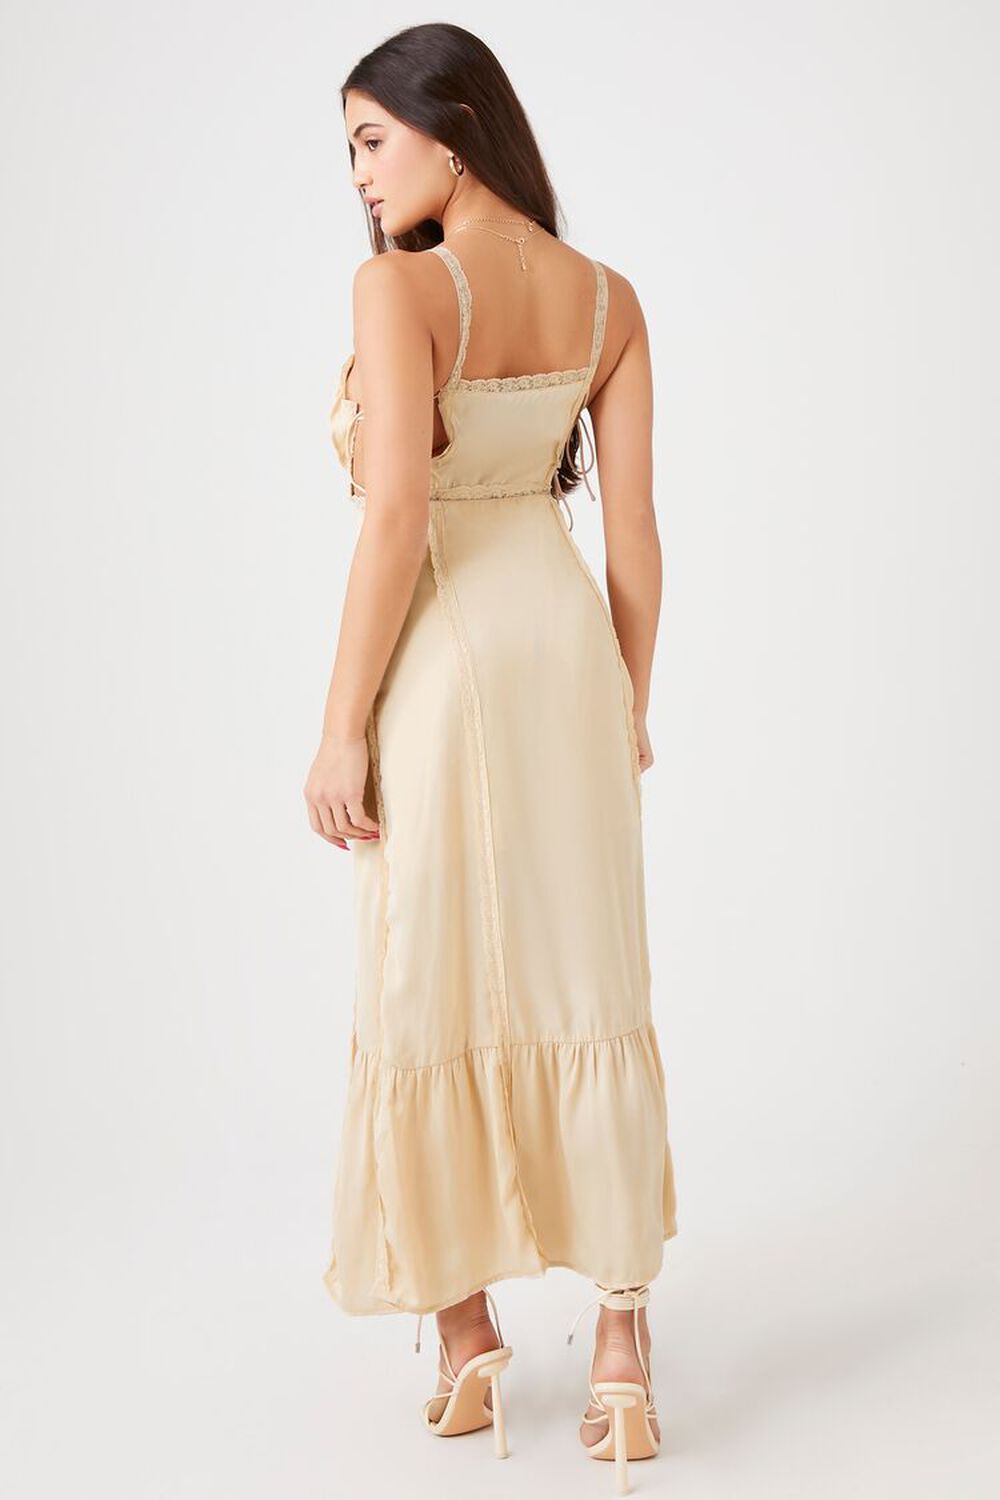 Satin Lace-Trim Cutout Midi Dress, image 3